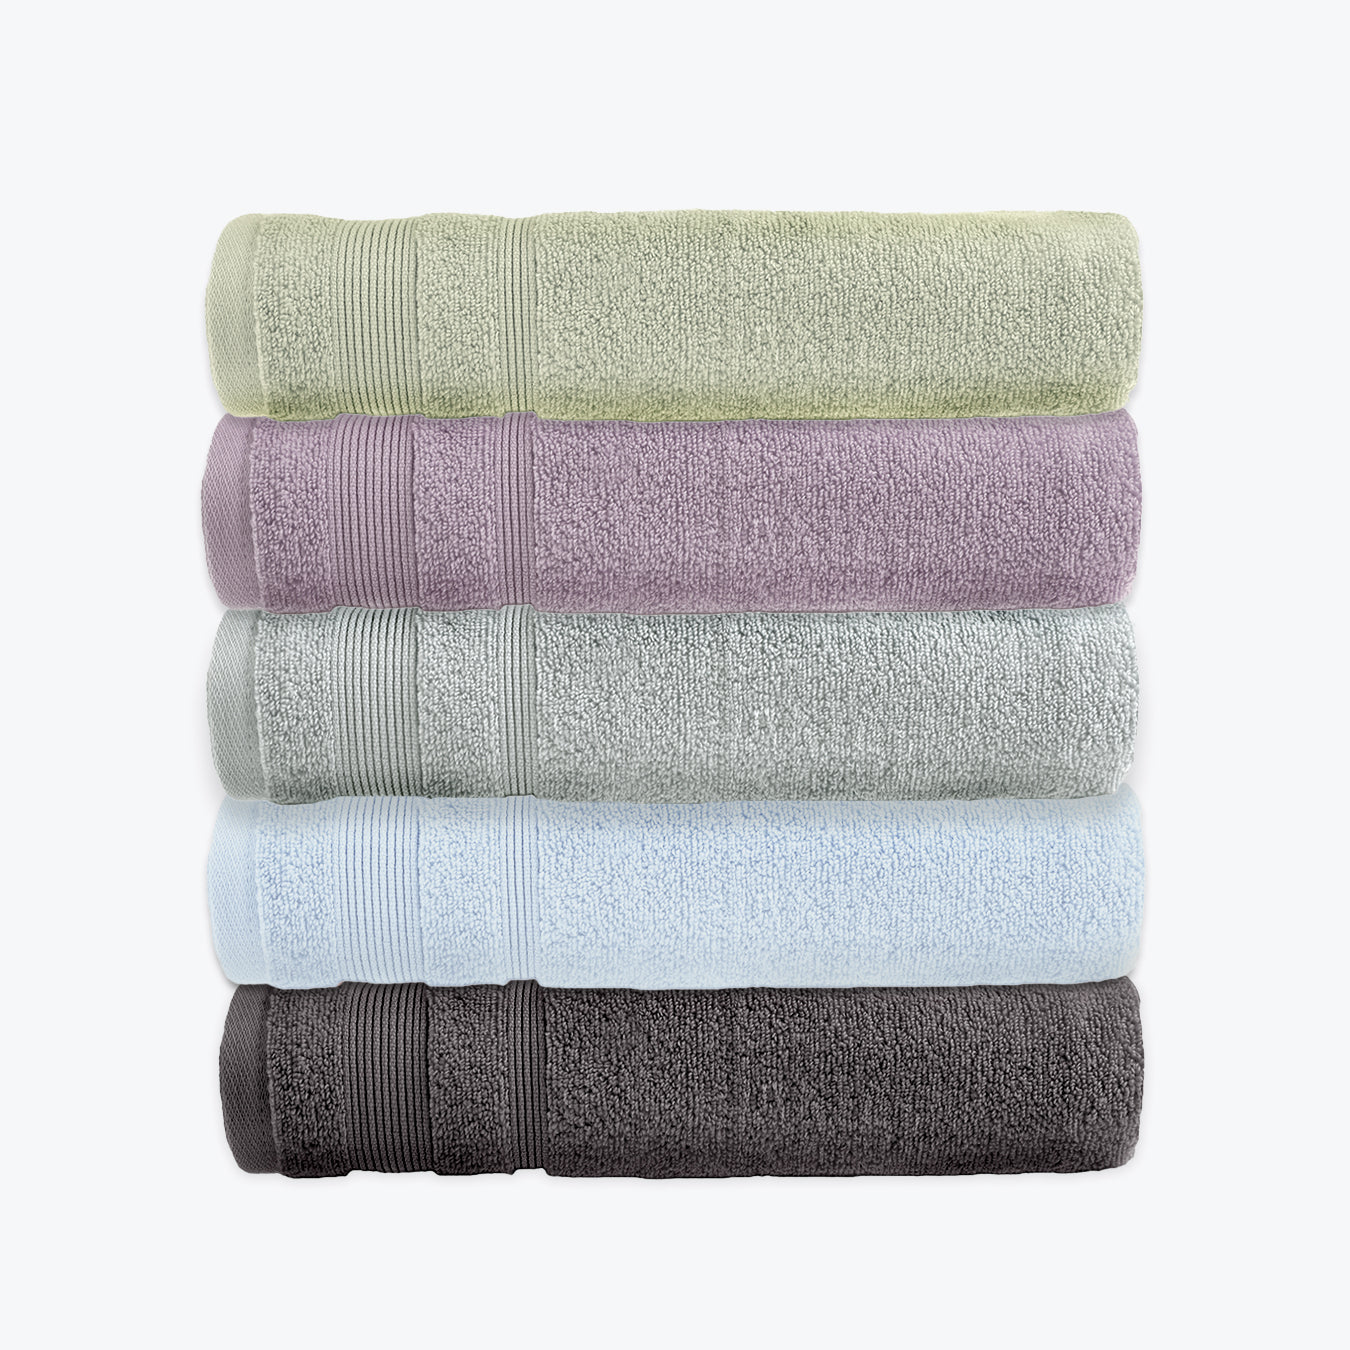 Premium Zero Twist Towels Luxury Egyptian Cotton Bathroom Towels. Hand Towel, Bath Towel, Bath Sheet and Face Cloth Sizes